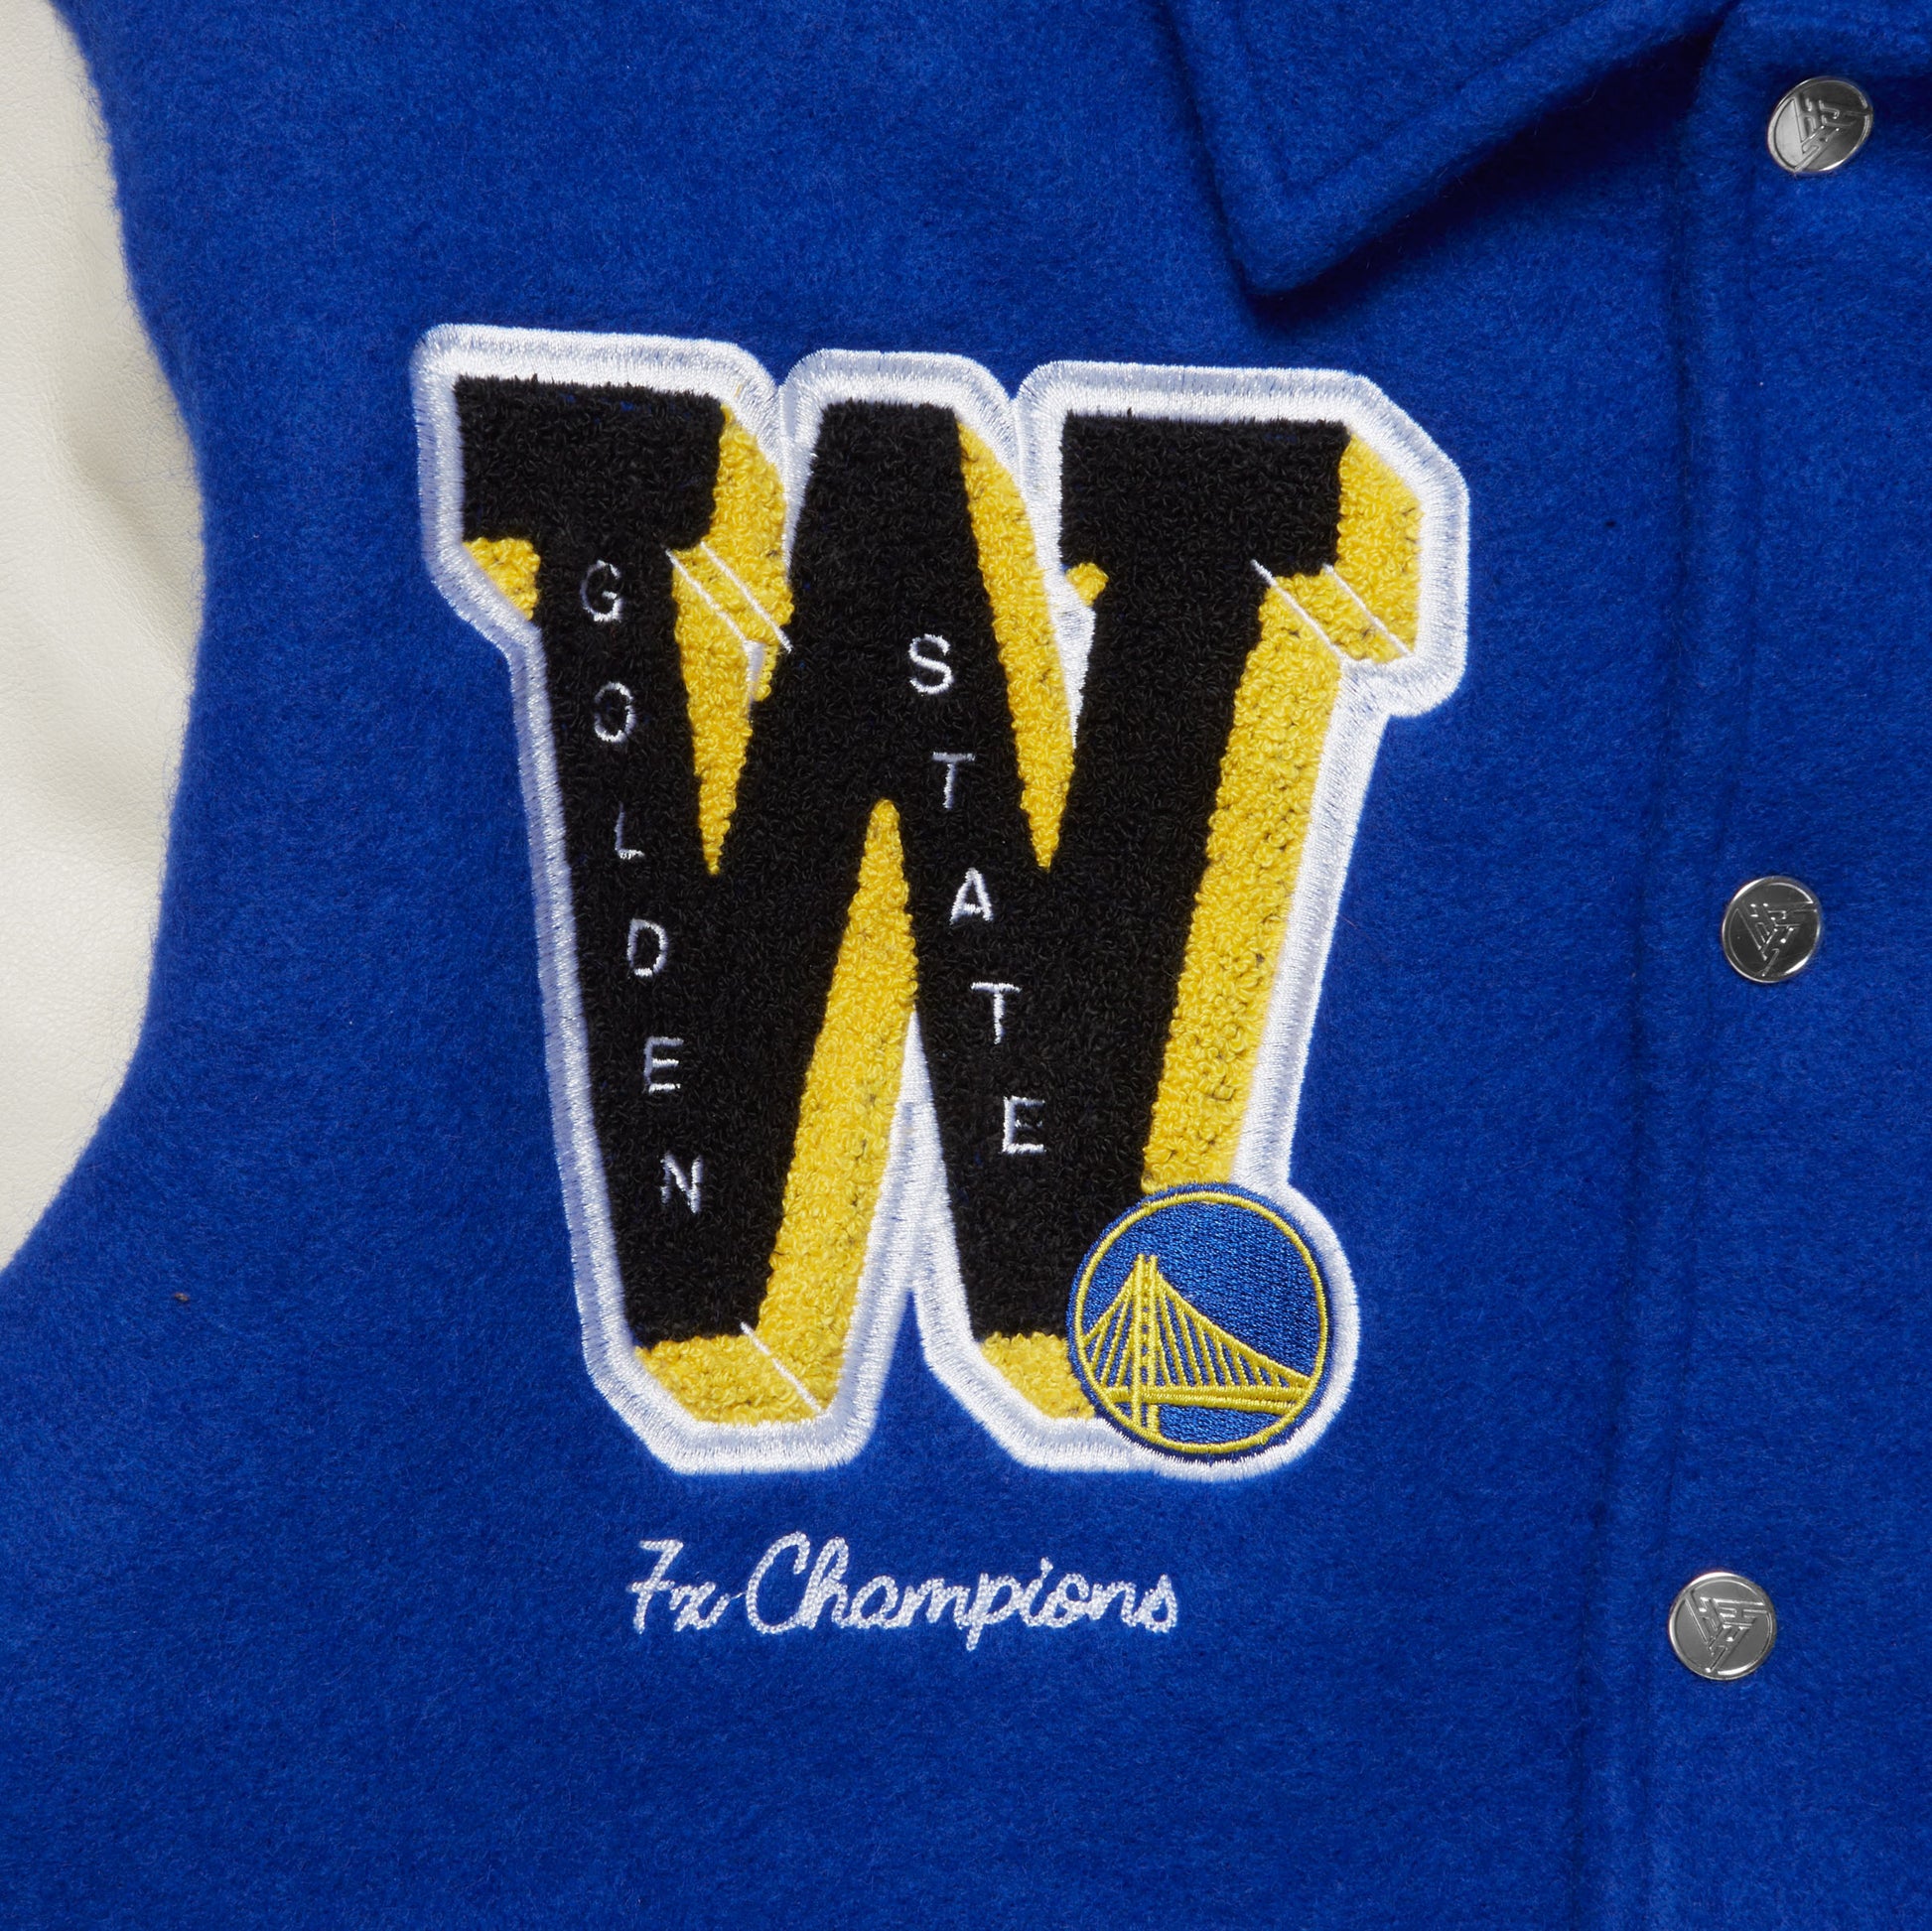 Golden State Warriors Warm Up Letterman Jacket